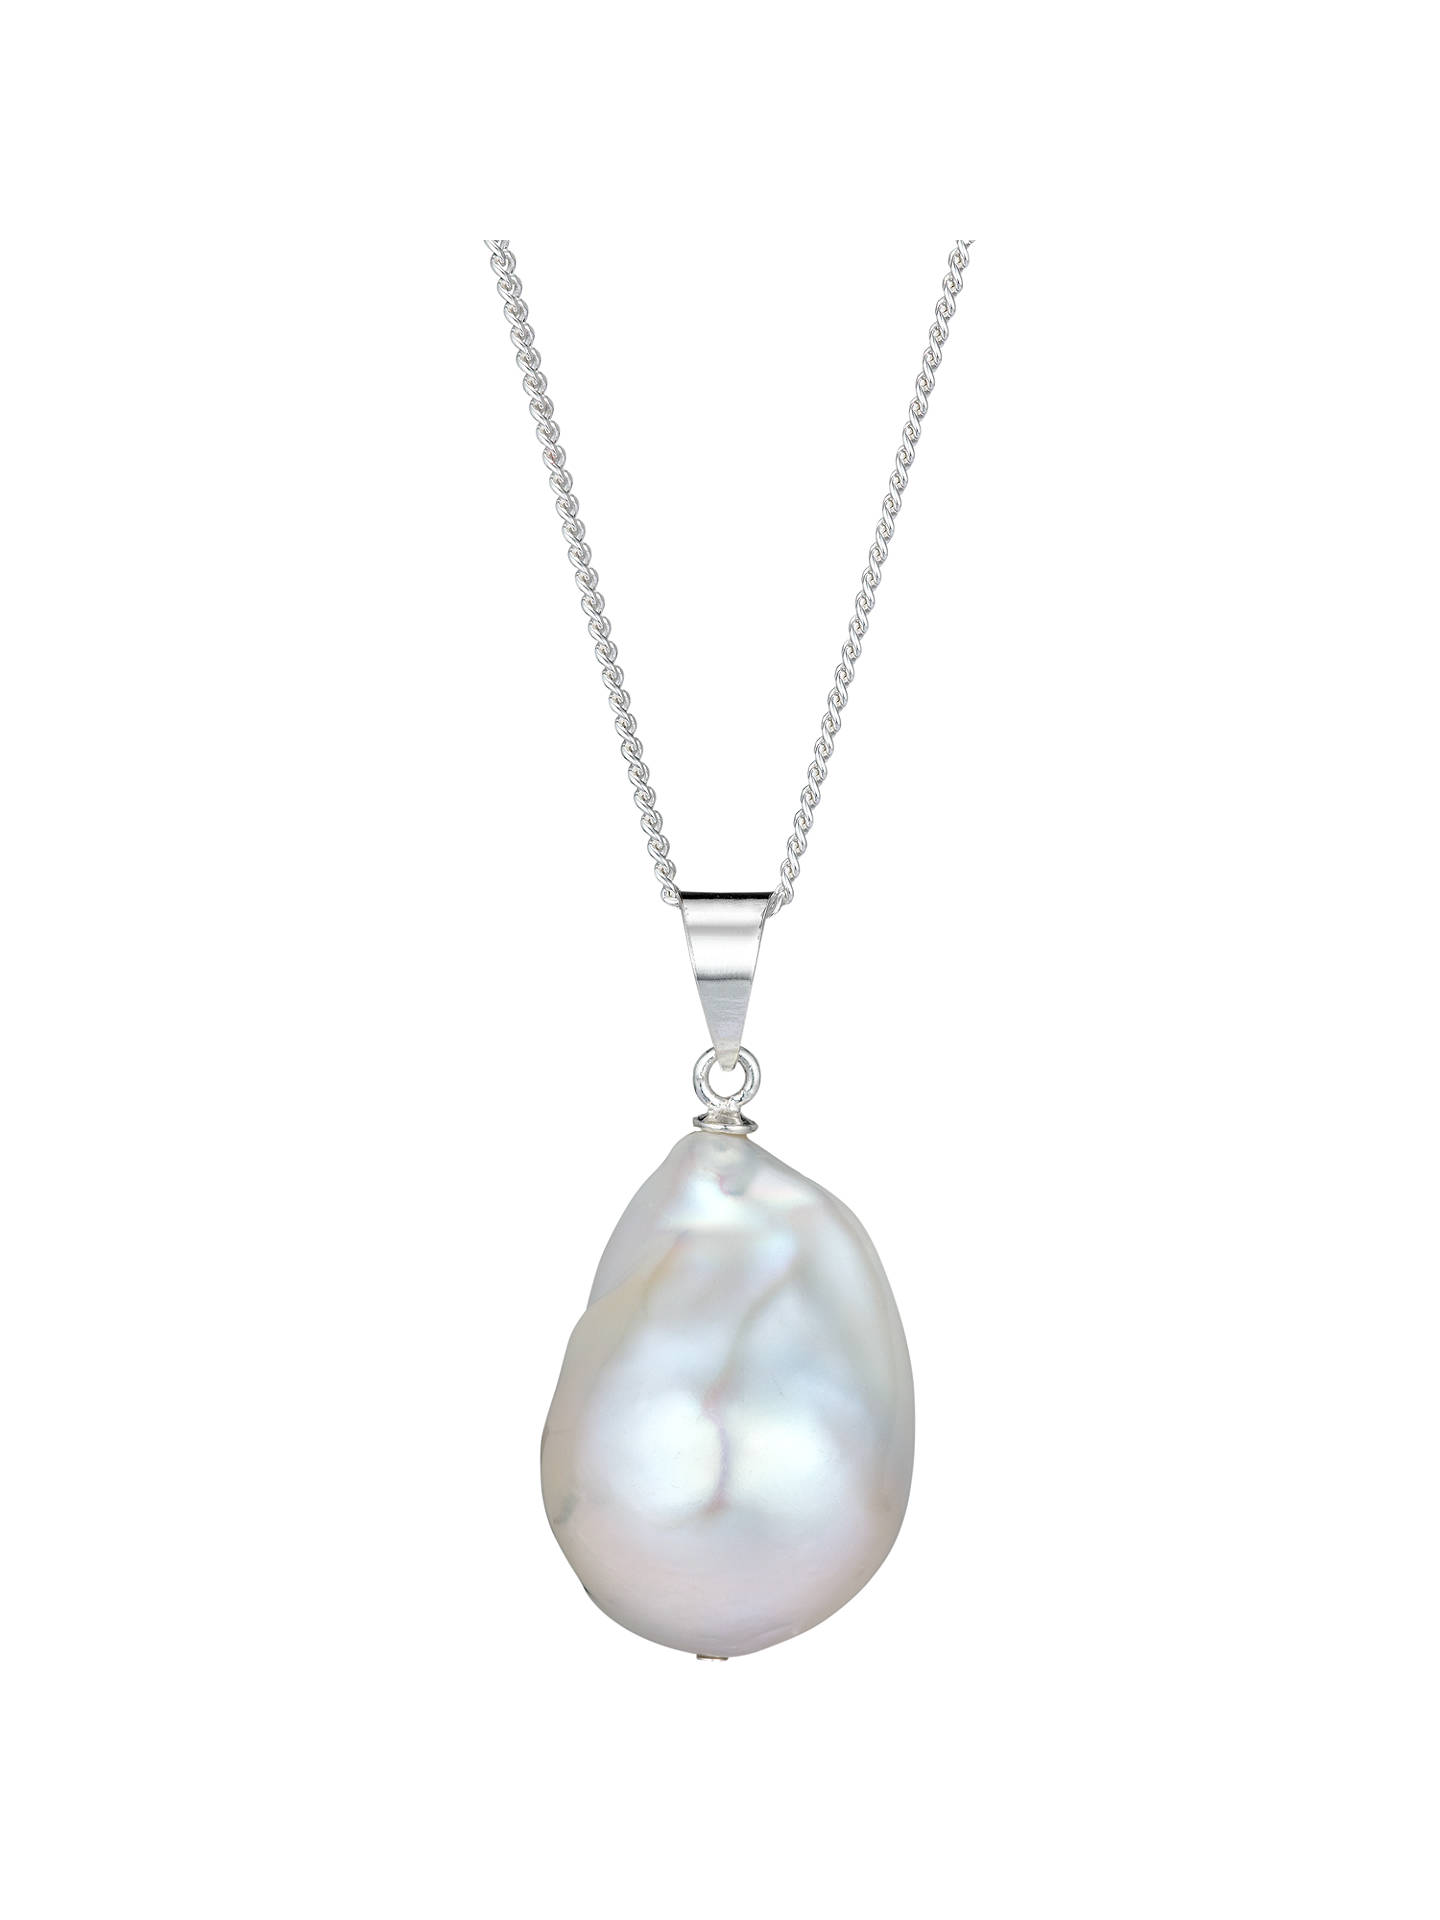 Huge rare baroque white genuine pearl women's birthday gift necklace 20 inch